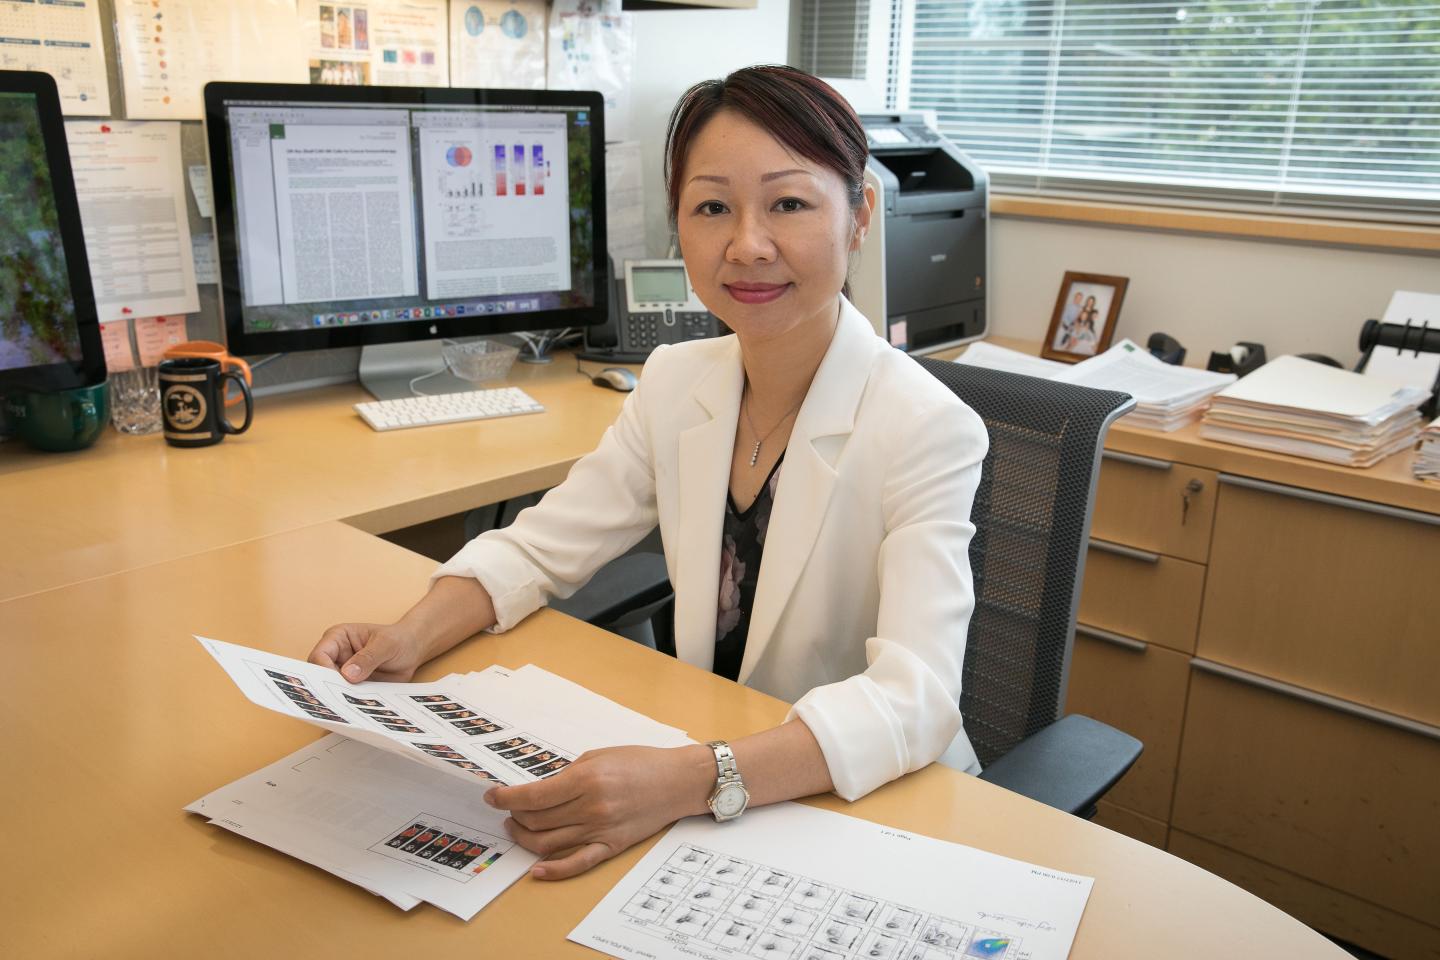 Lili Yang, PhD